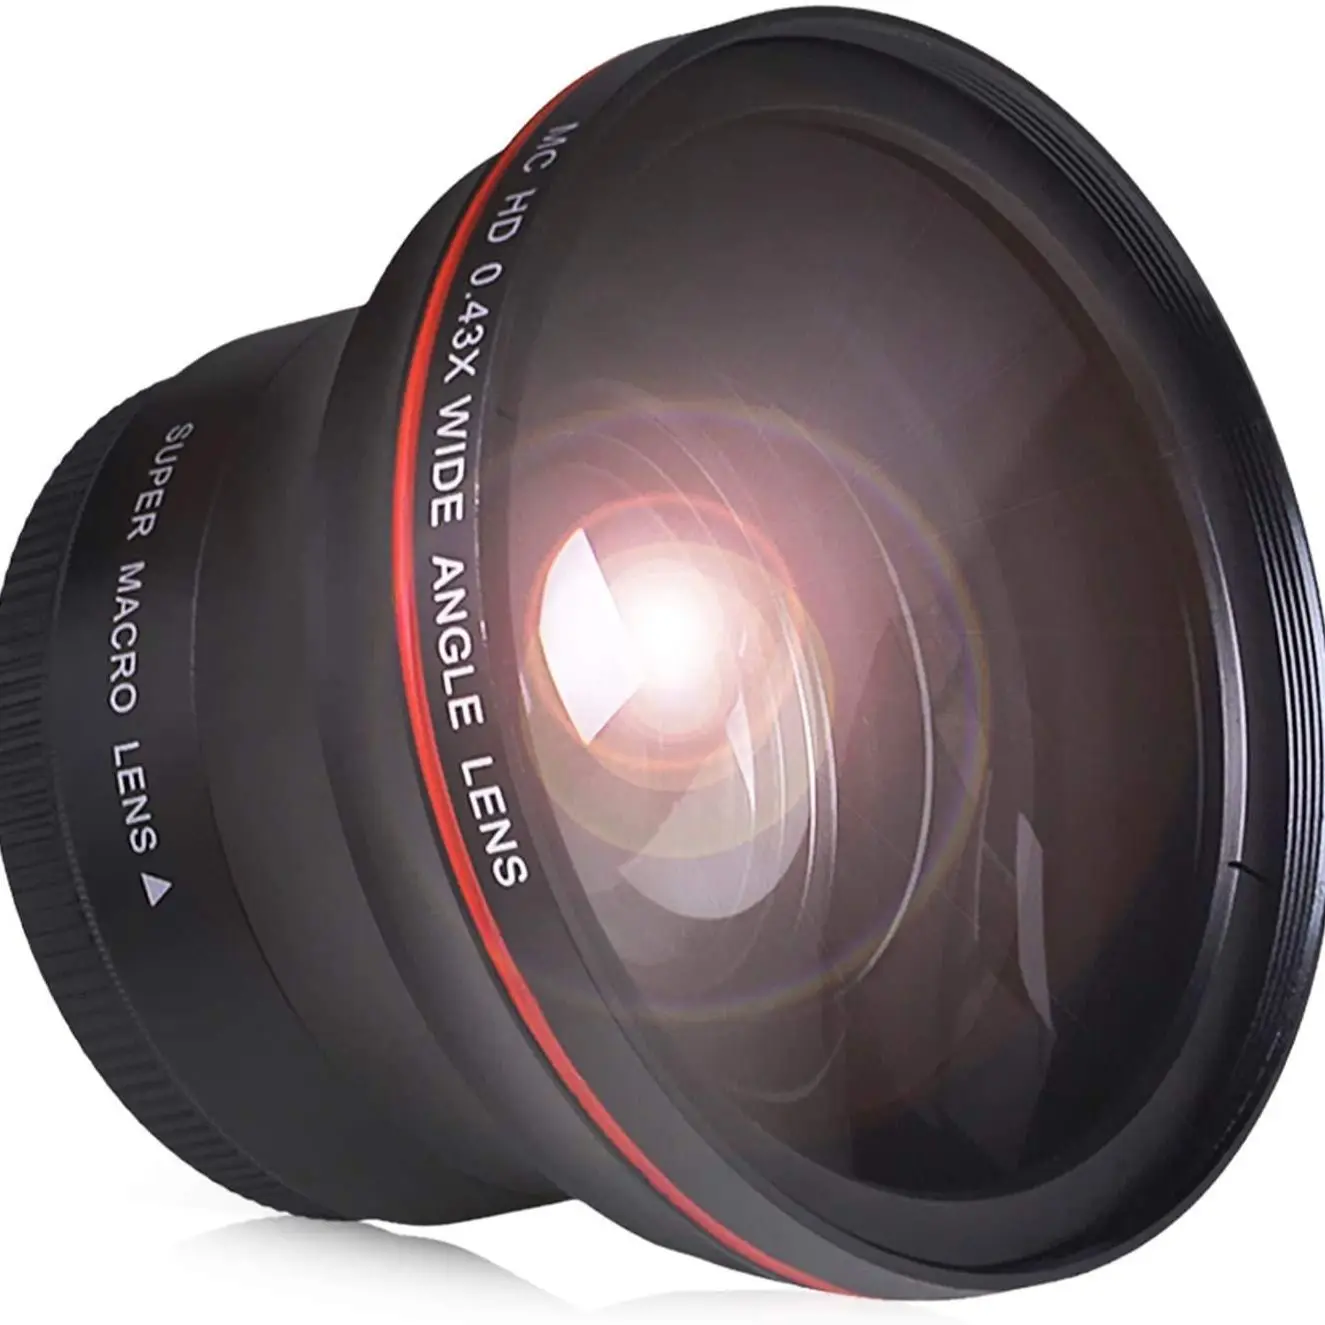 

52MM 0.43x Professional HD Wide Angle Lens (W/Macro Portion) for Nikon D7100 D7000 D5500 D5300 D5200 D5100 D3300 DSLR Camera